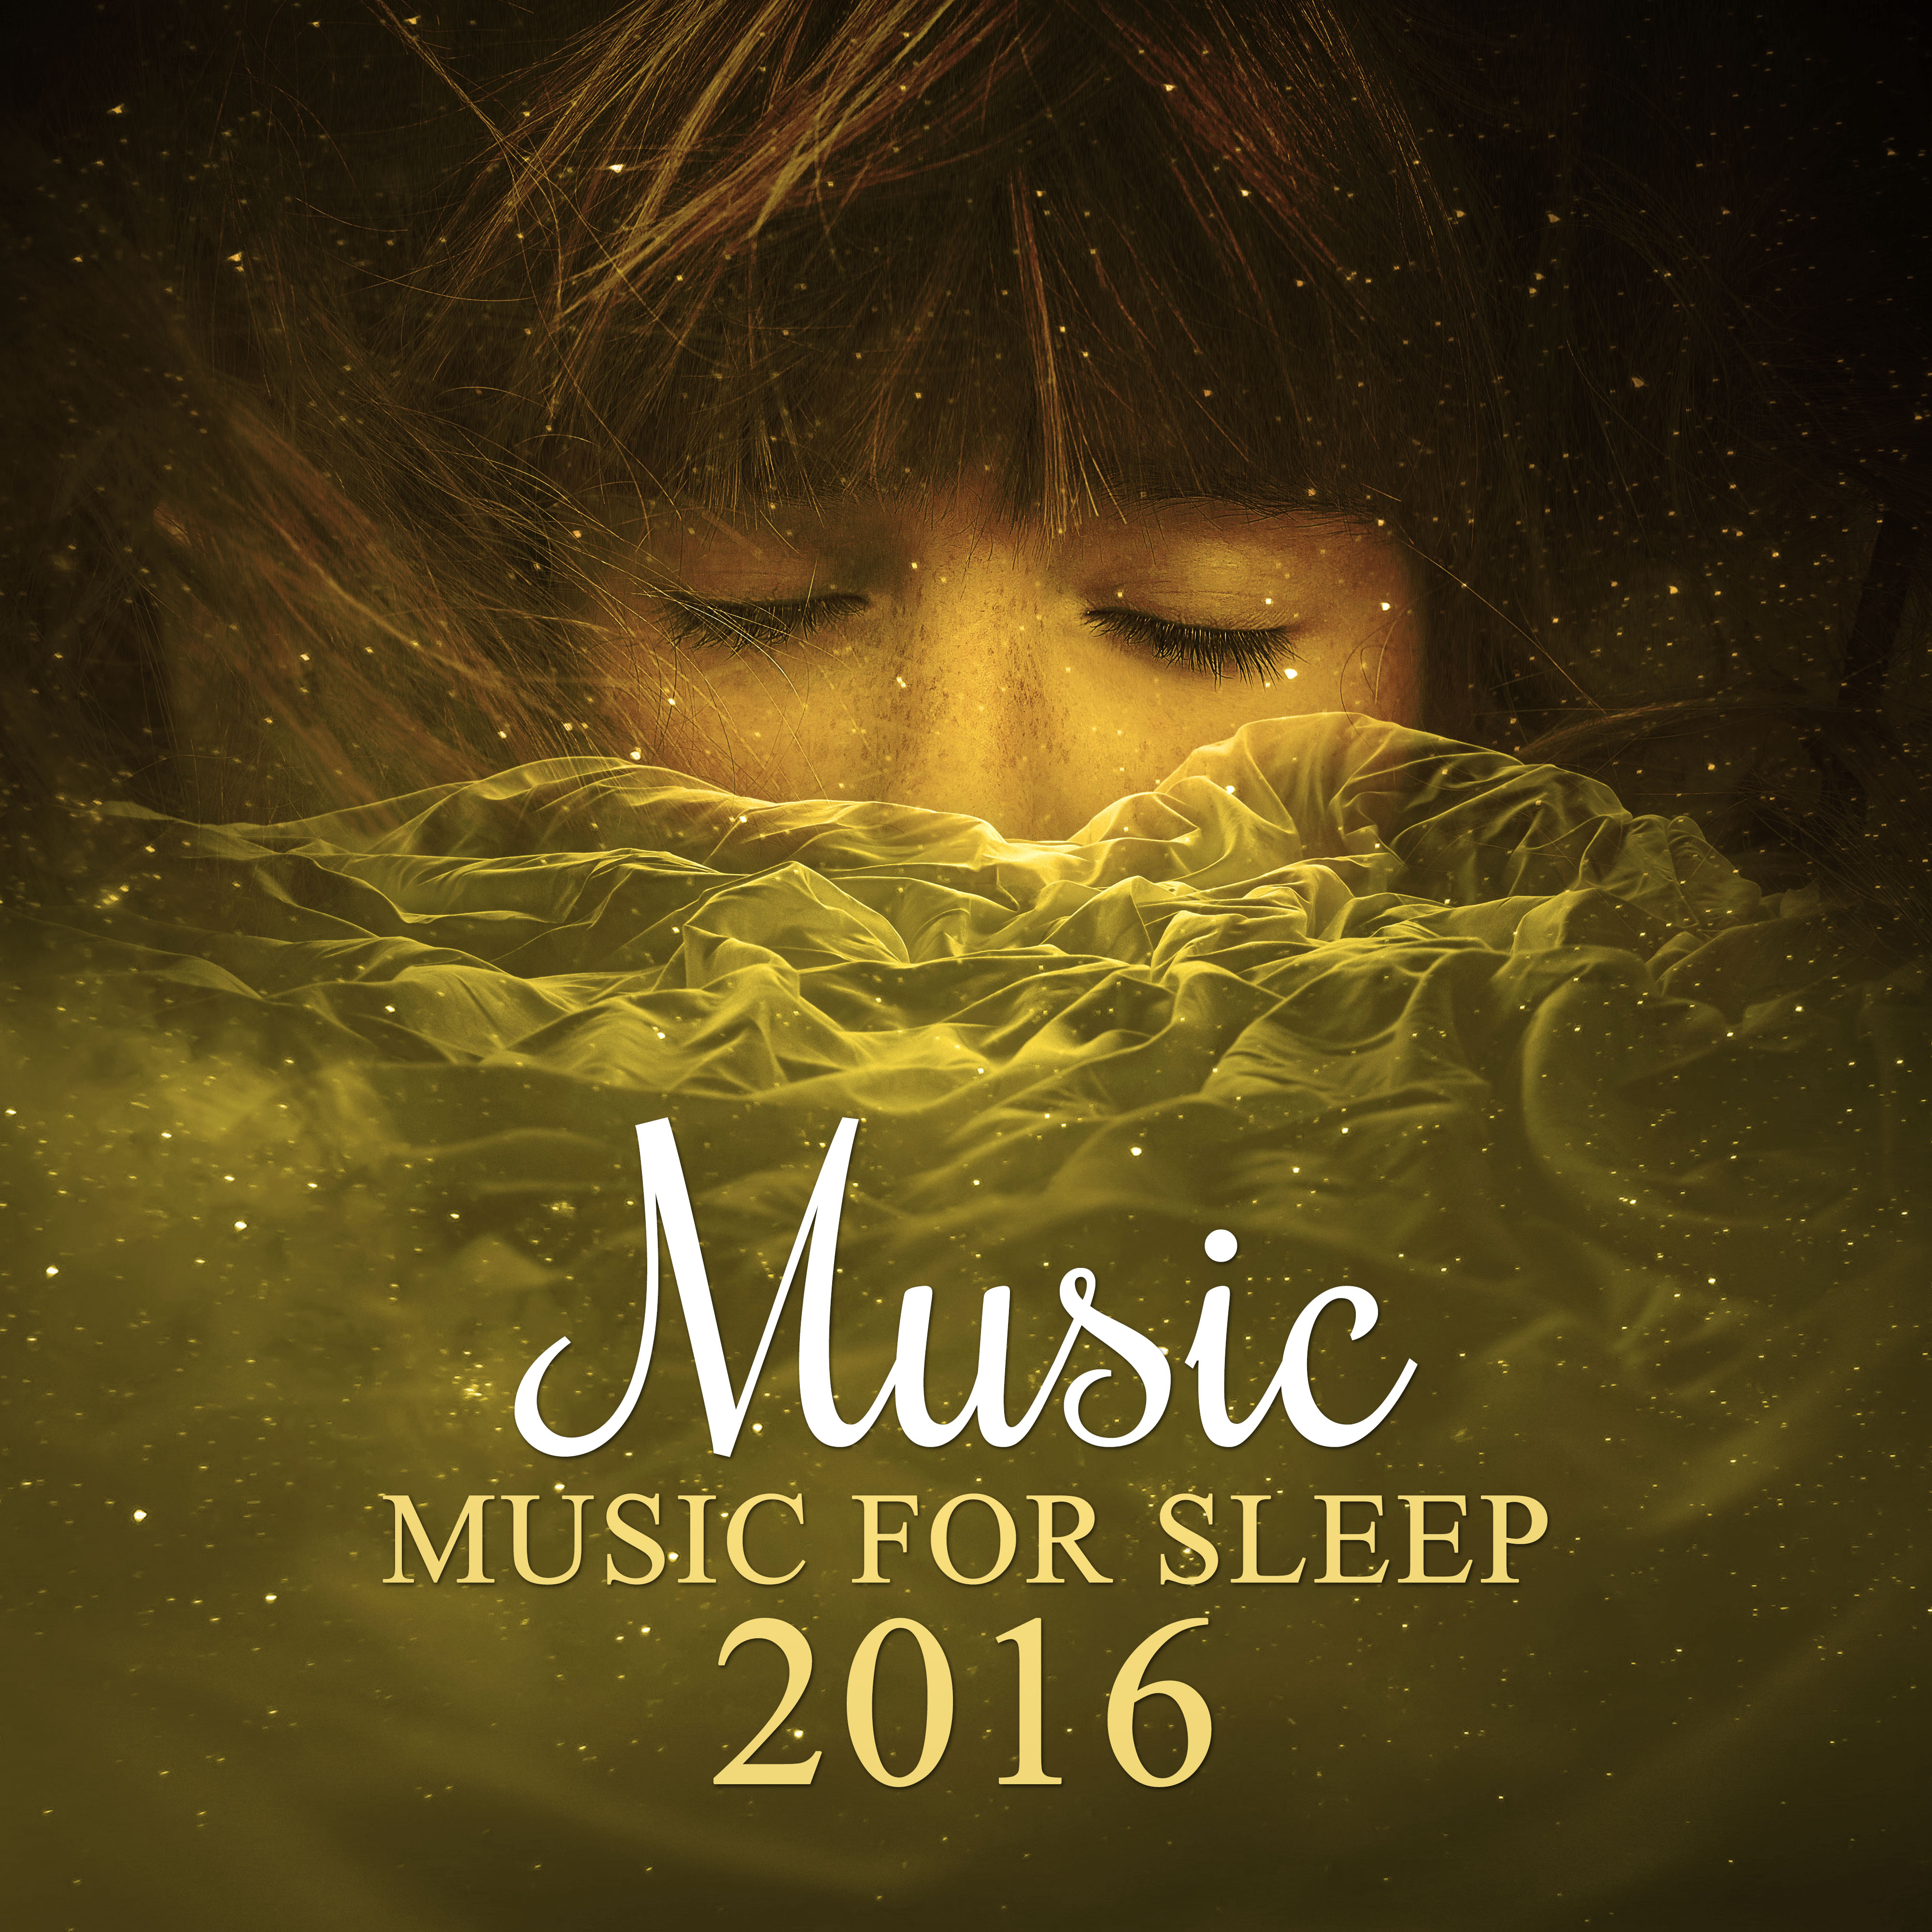 Music for Sleep 2016  Calm Sounds of Nature to Help You Fall Asleep  Rest, Beautiful Peaceful Music, Sleepy Sleep, Relaxing Music